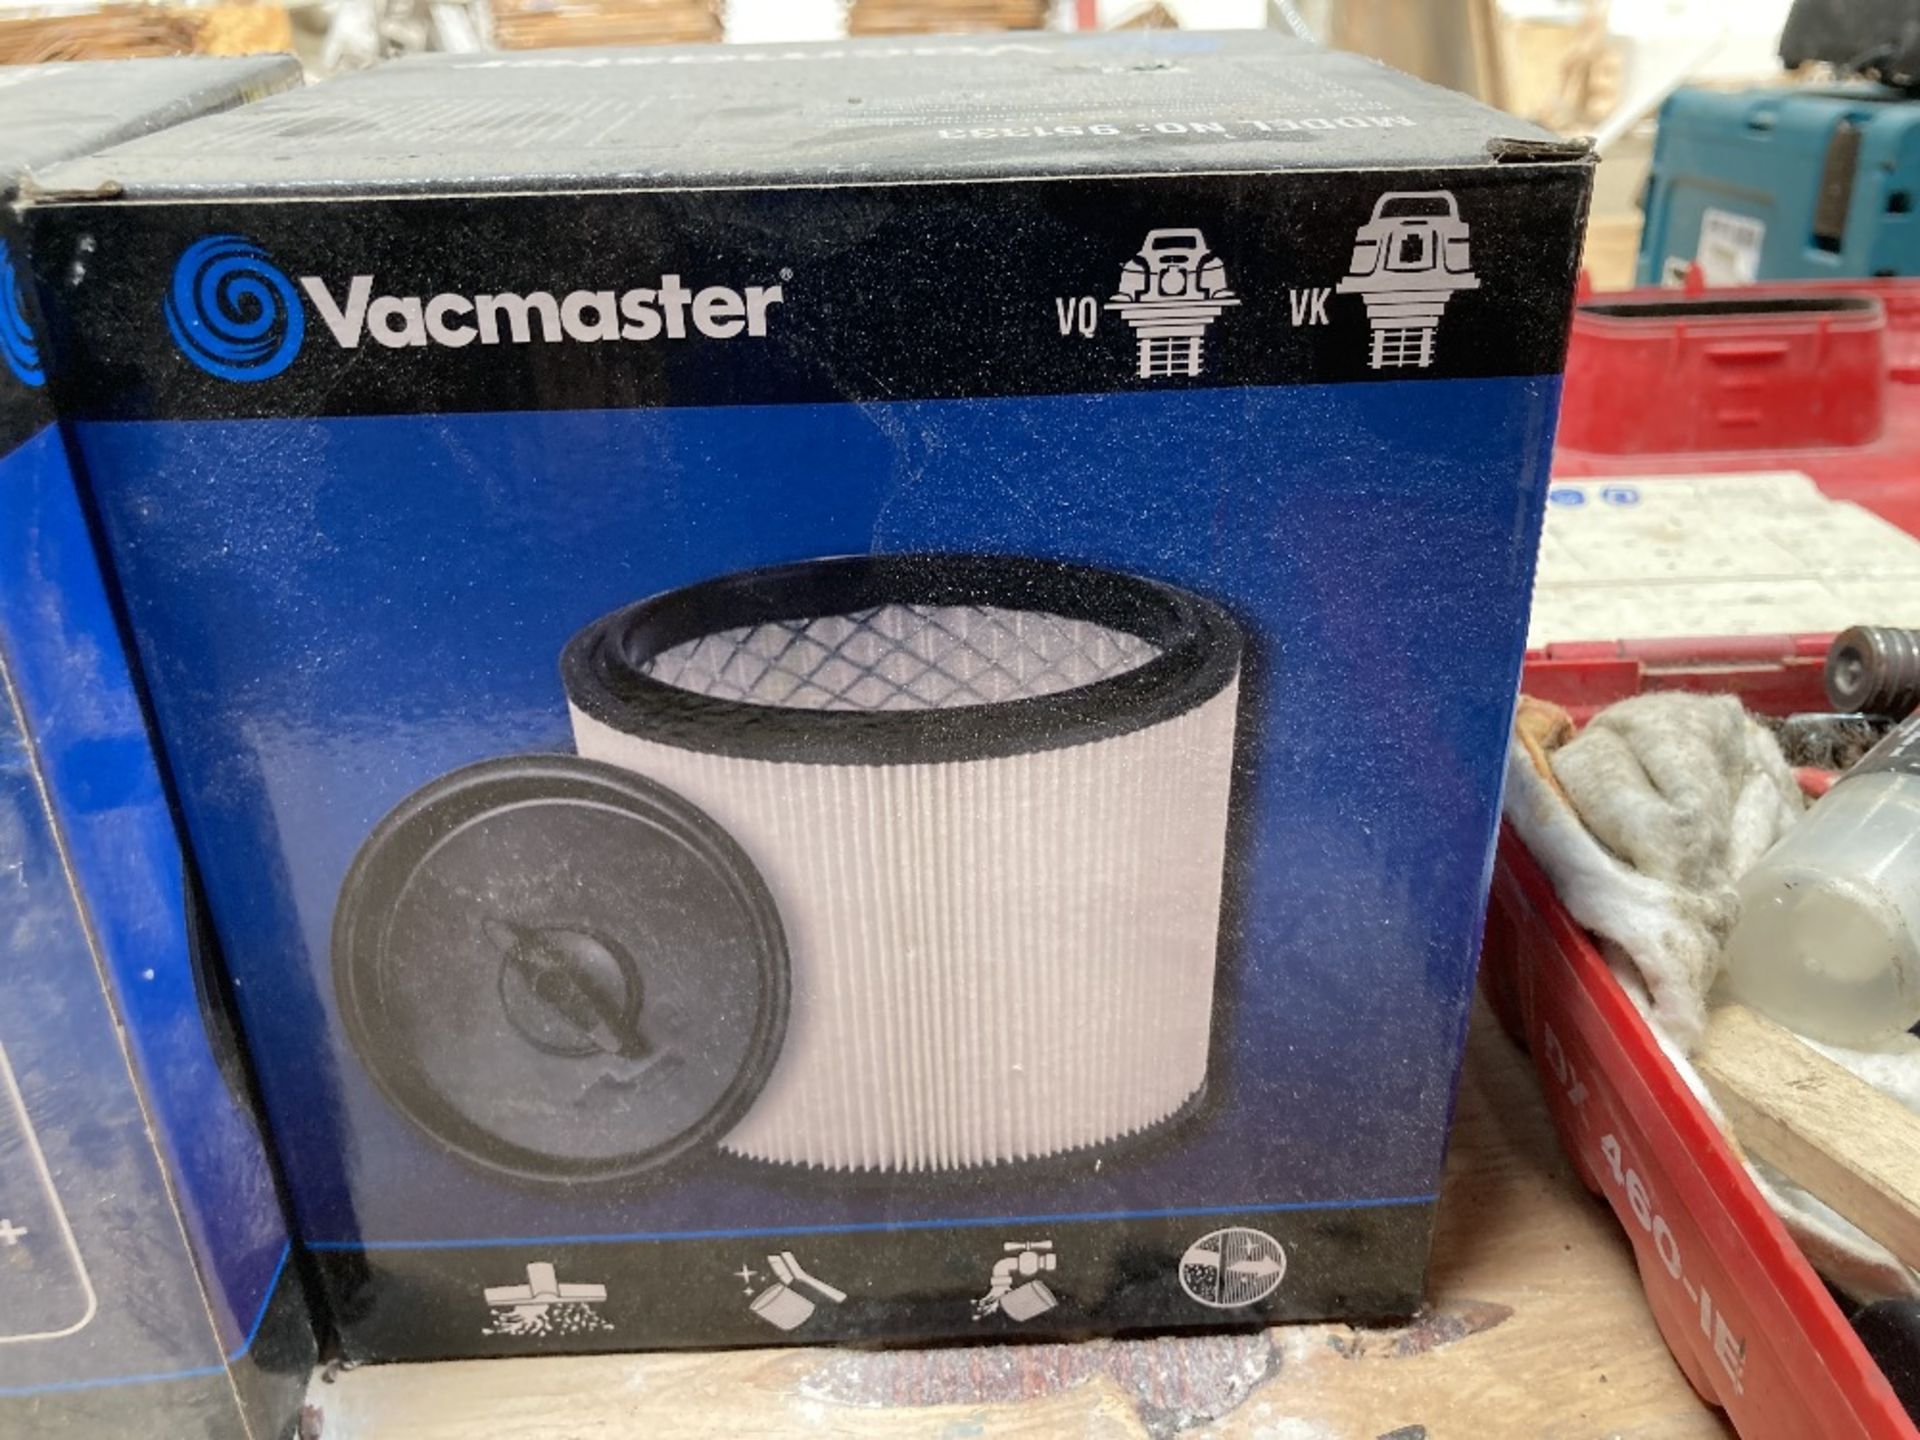 (2) Vacmaster 951333 cartridge filters